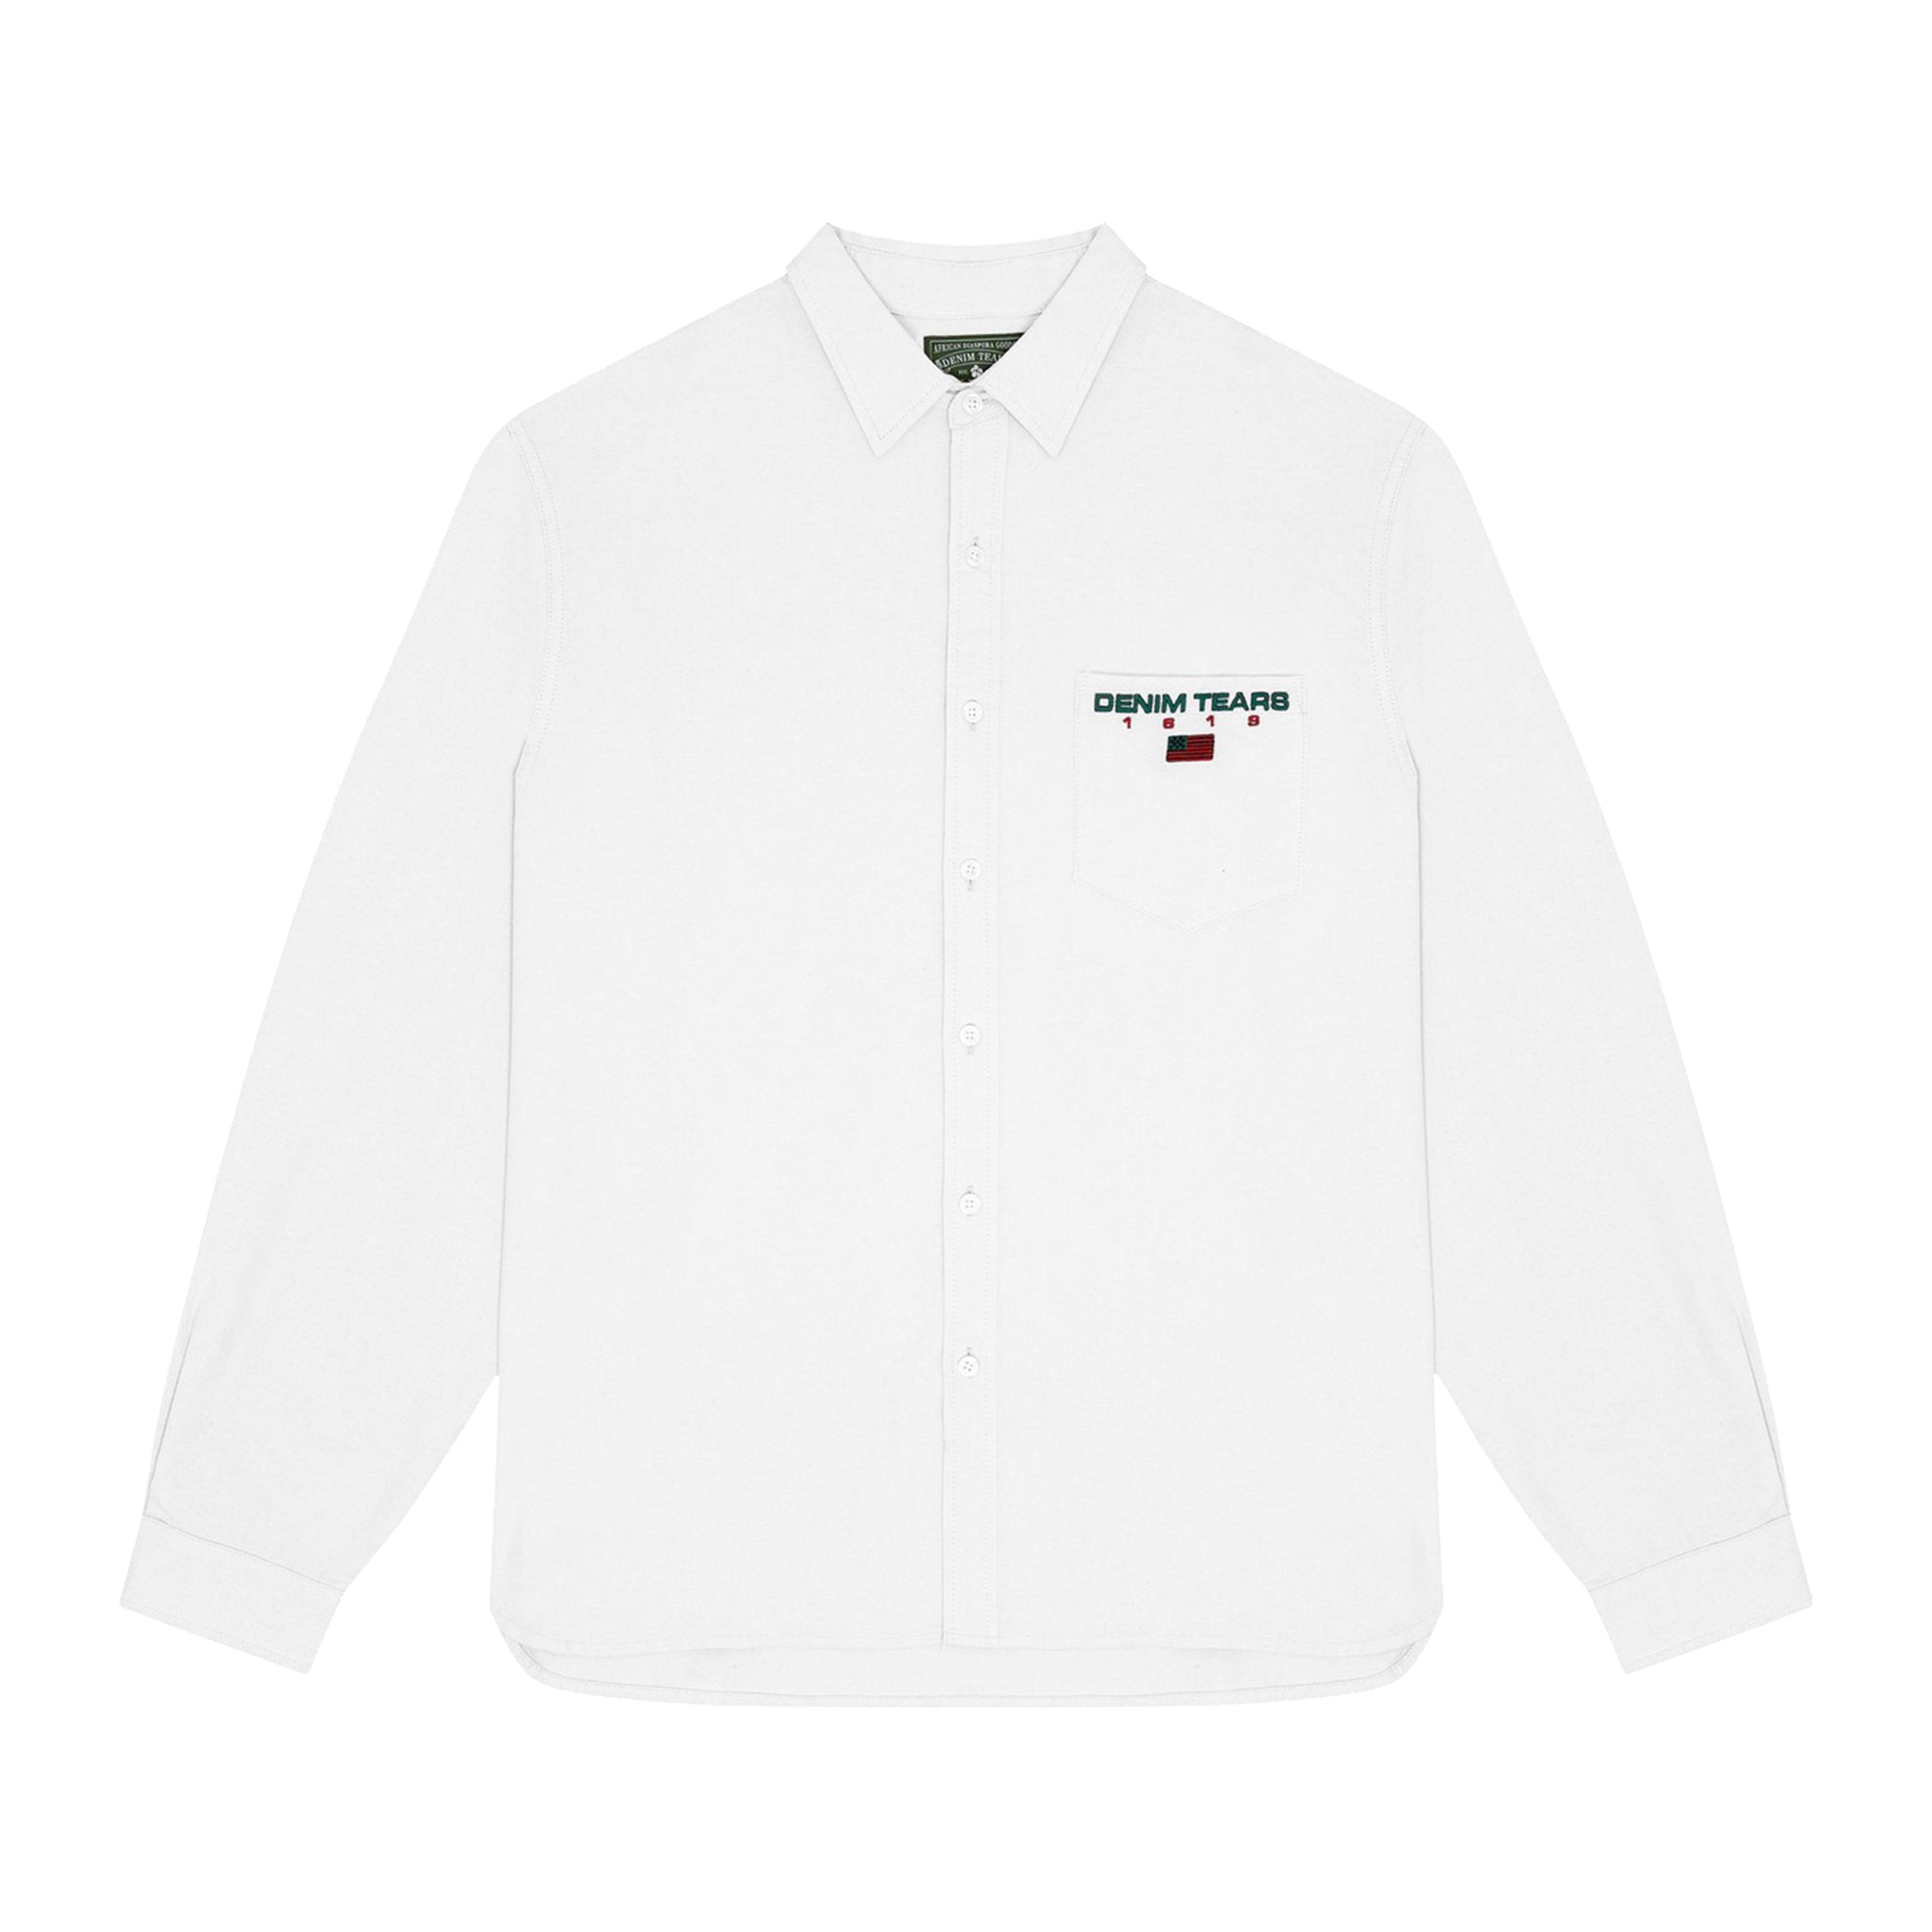 Denim Tears - Men’s Denim Sport Oxford Shirt - (White) view 1